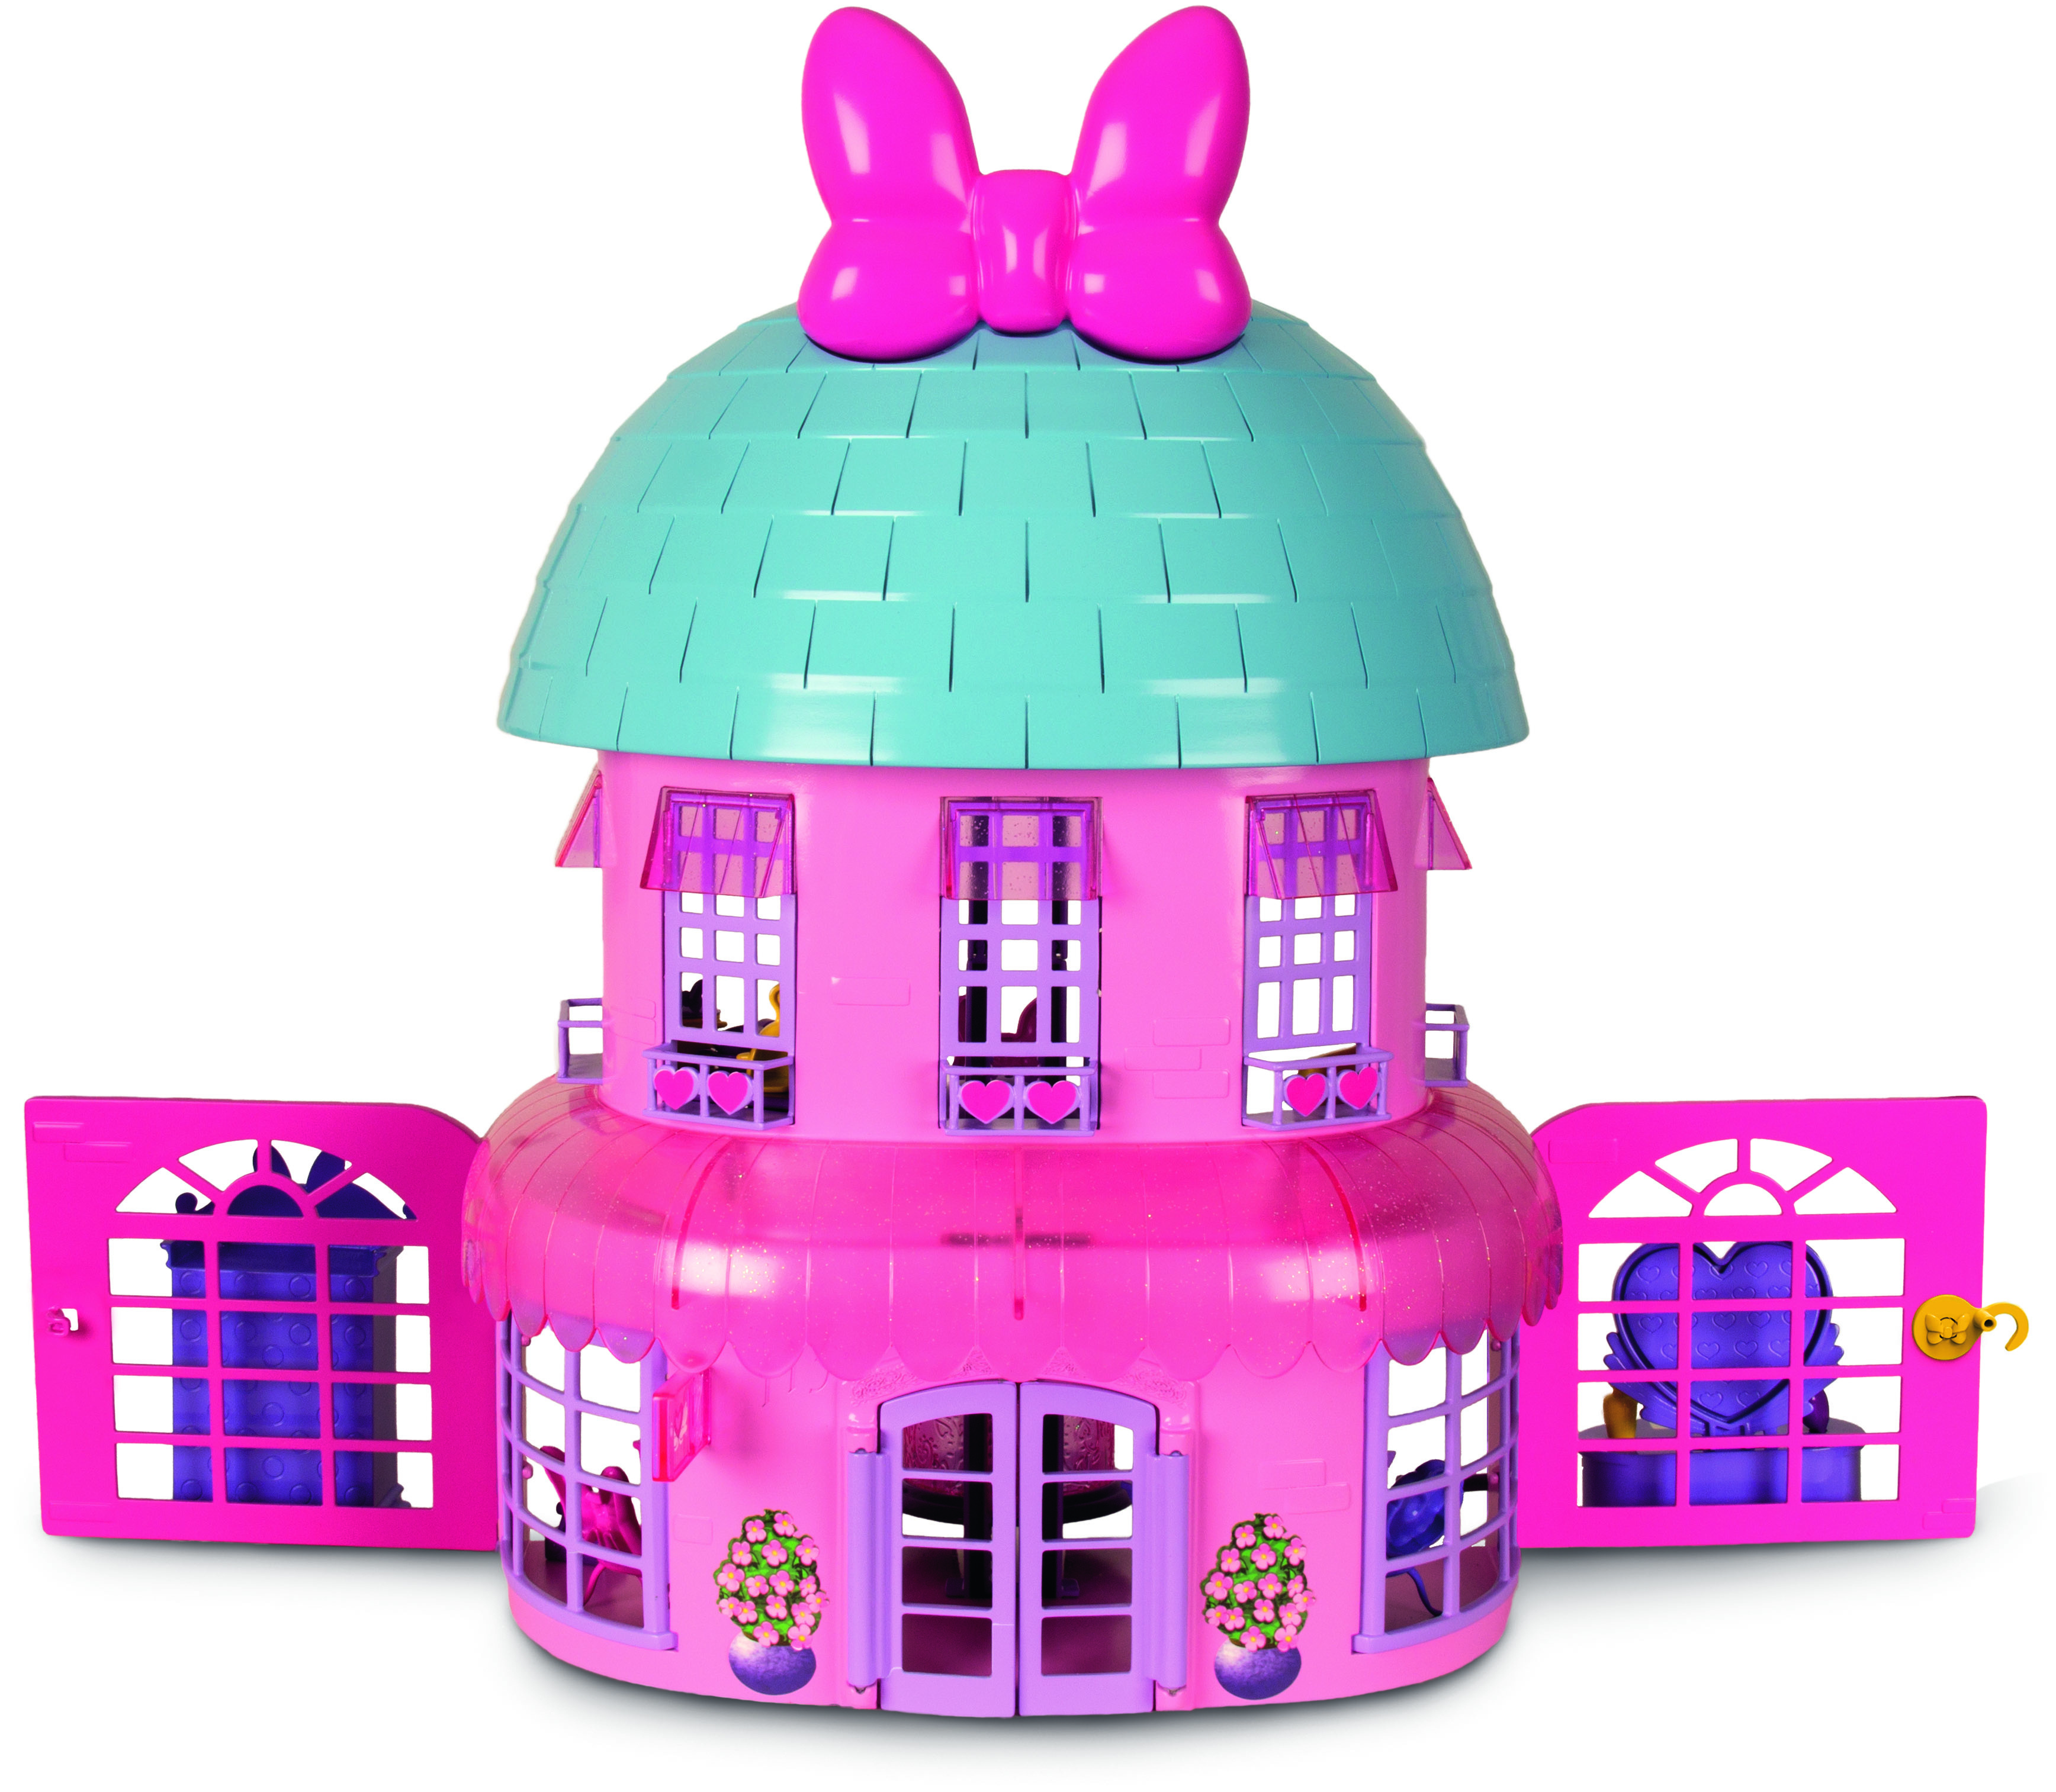 La maison de Minnie - IMC - 59.99 euros.jpg